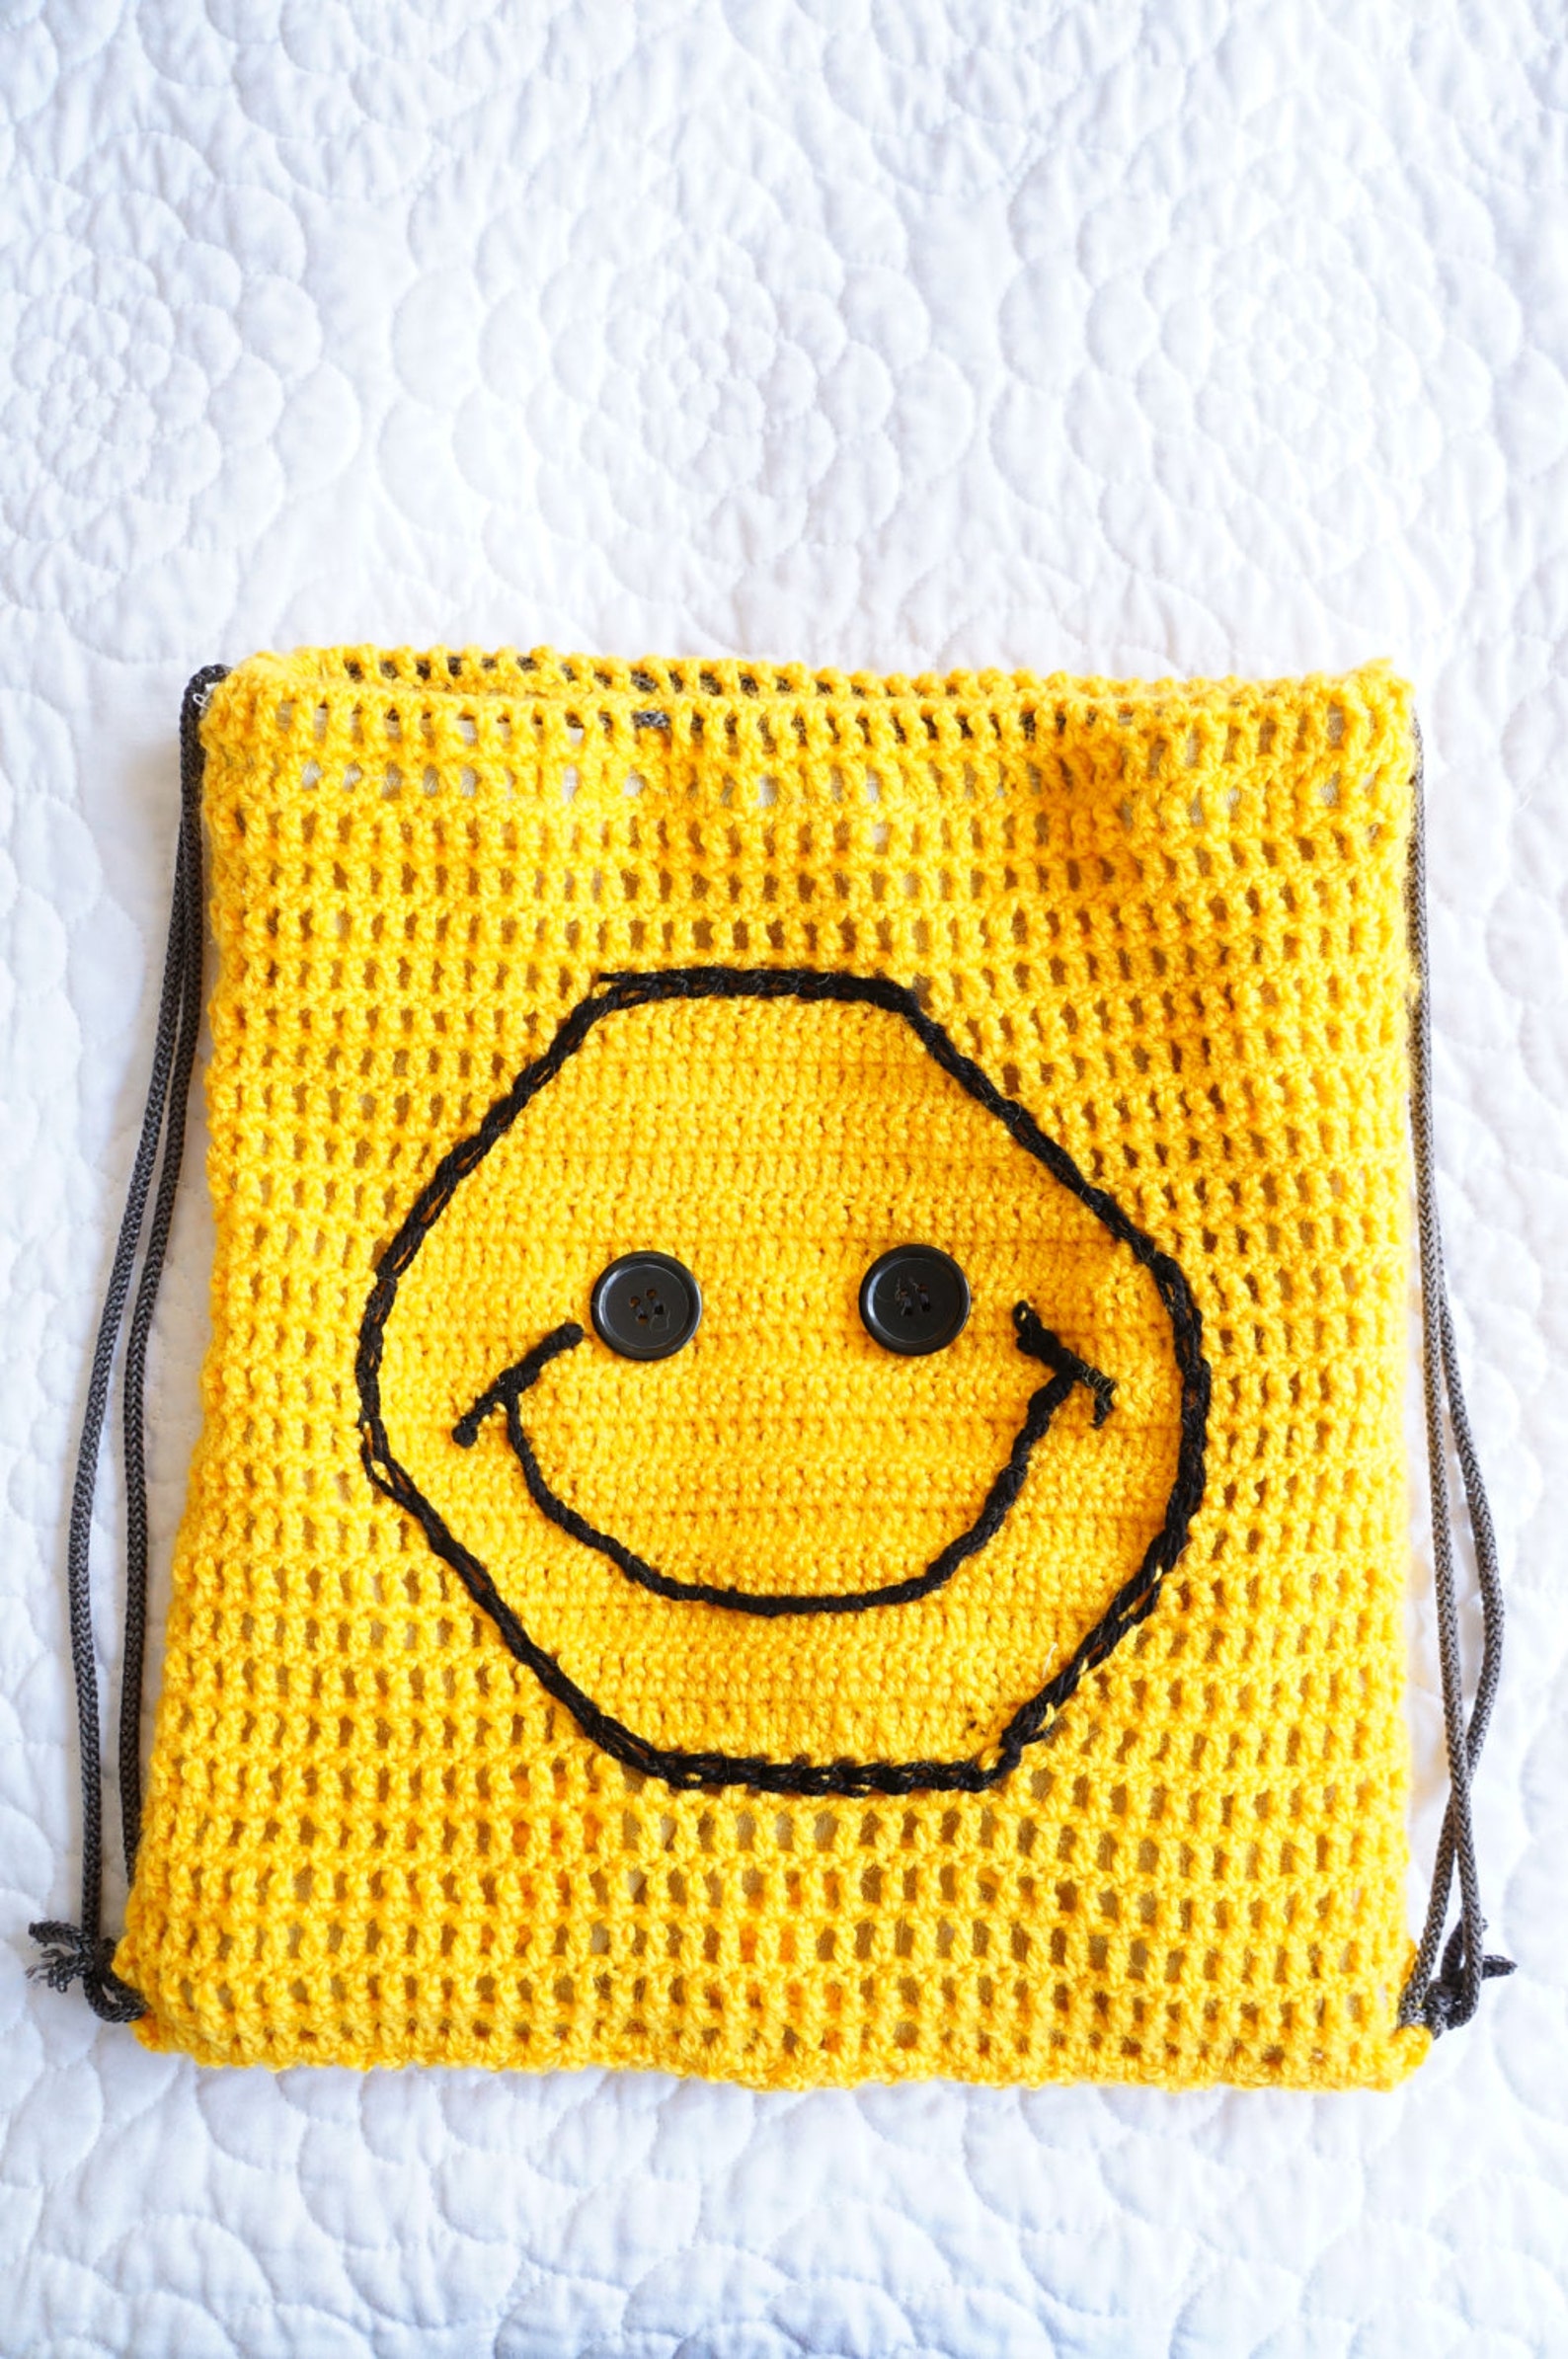 Smiley Bag Kid Bag Child Bag Children Bag School Bag Yellow | Etsy